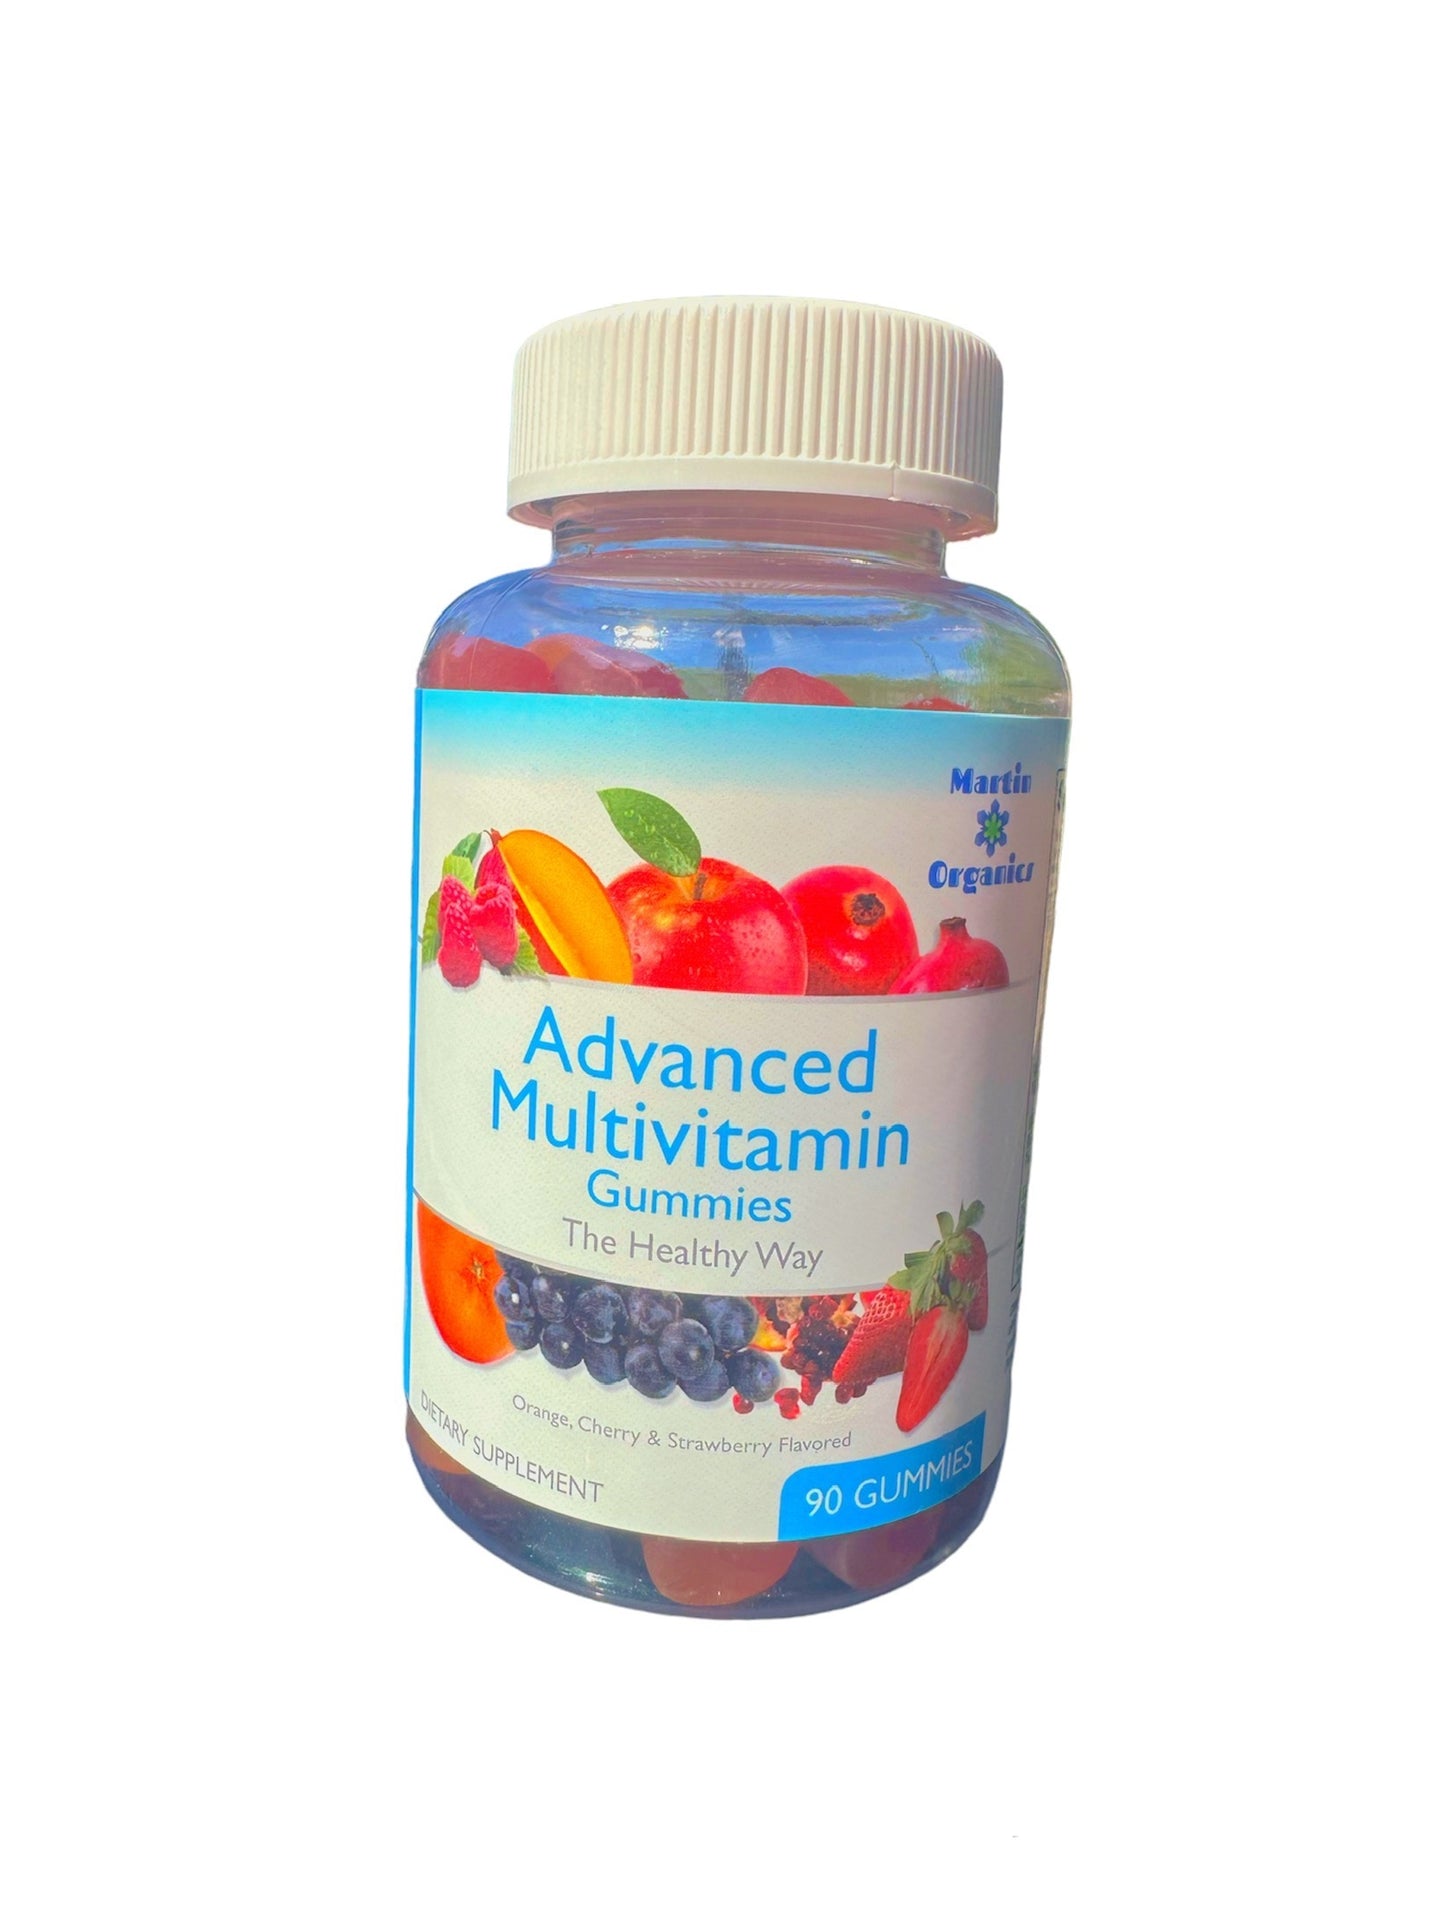 Advanced Multivitamin Gummies